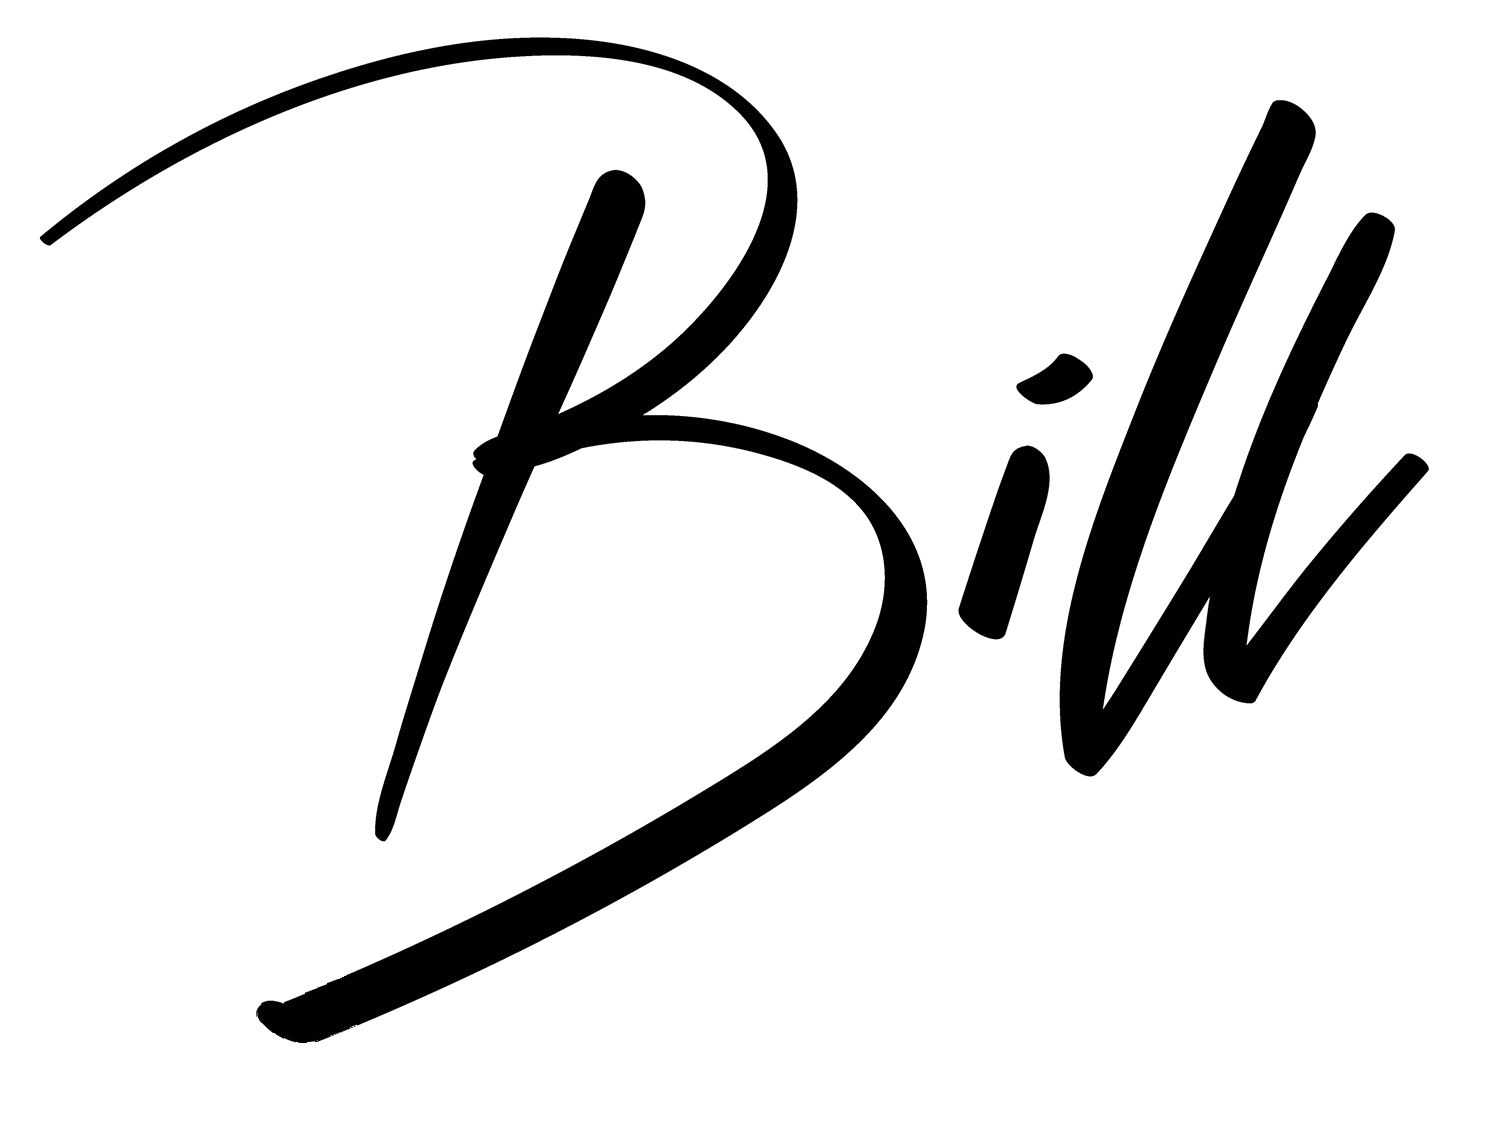 Cursive signature of Bill.